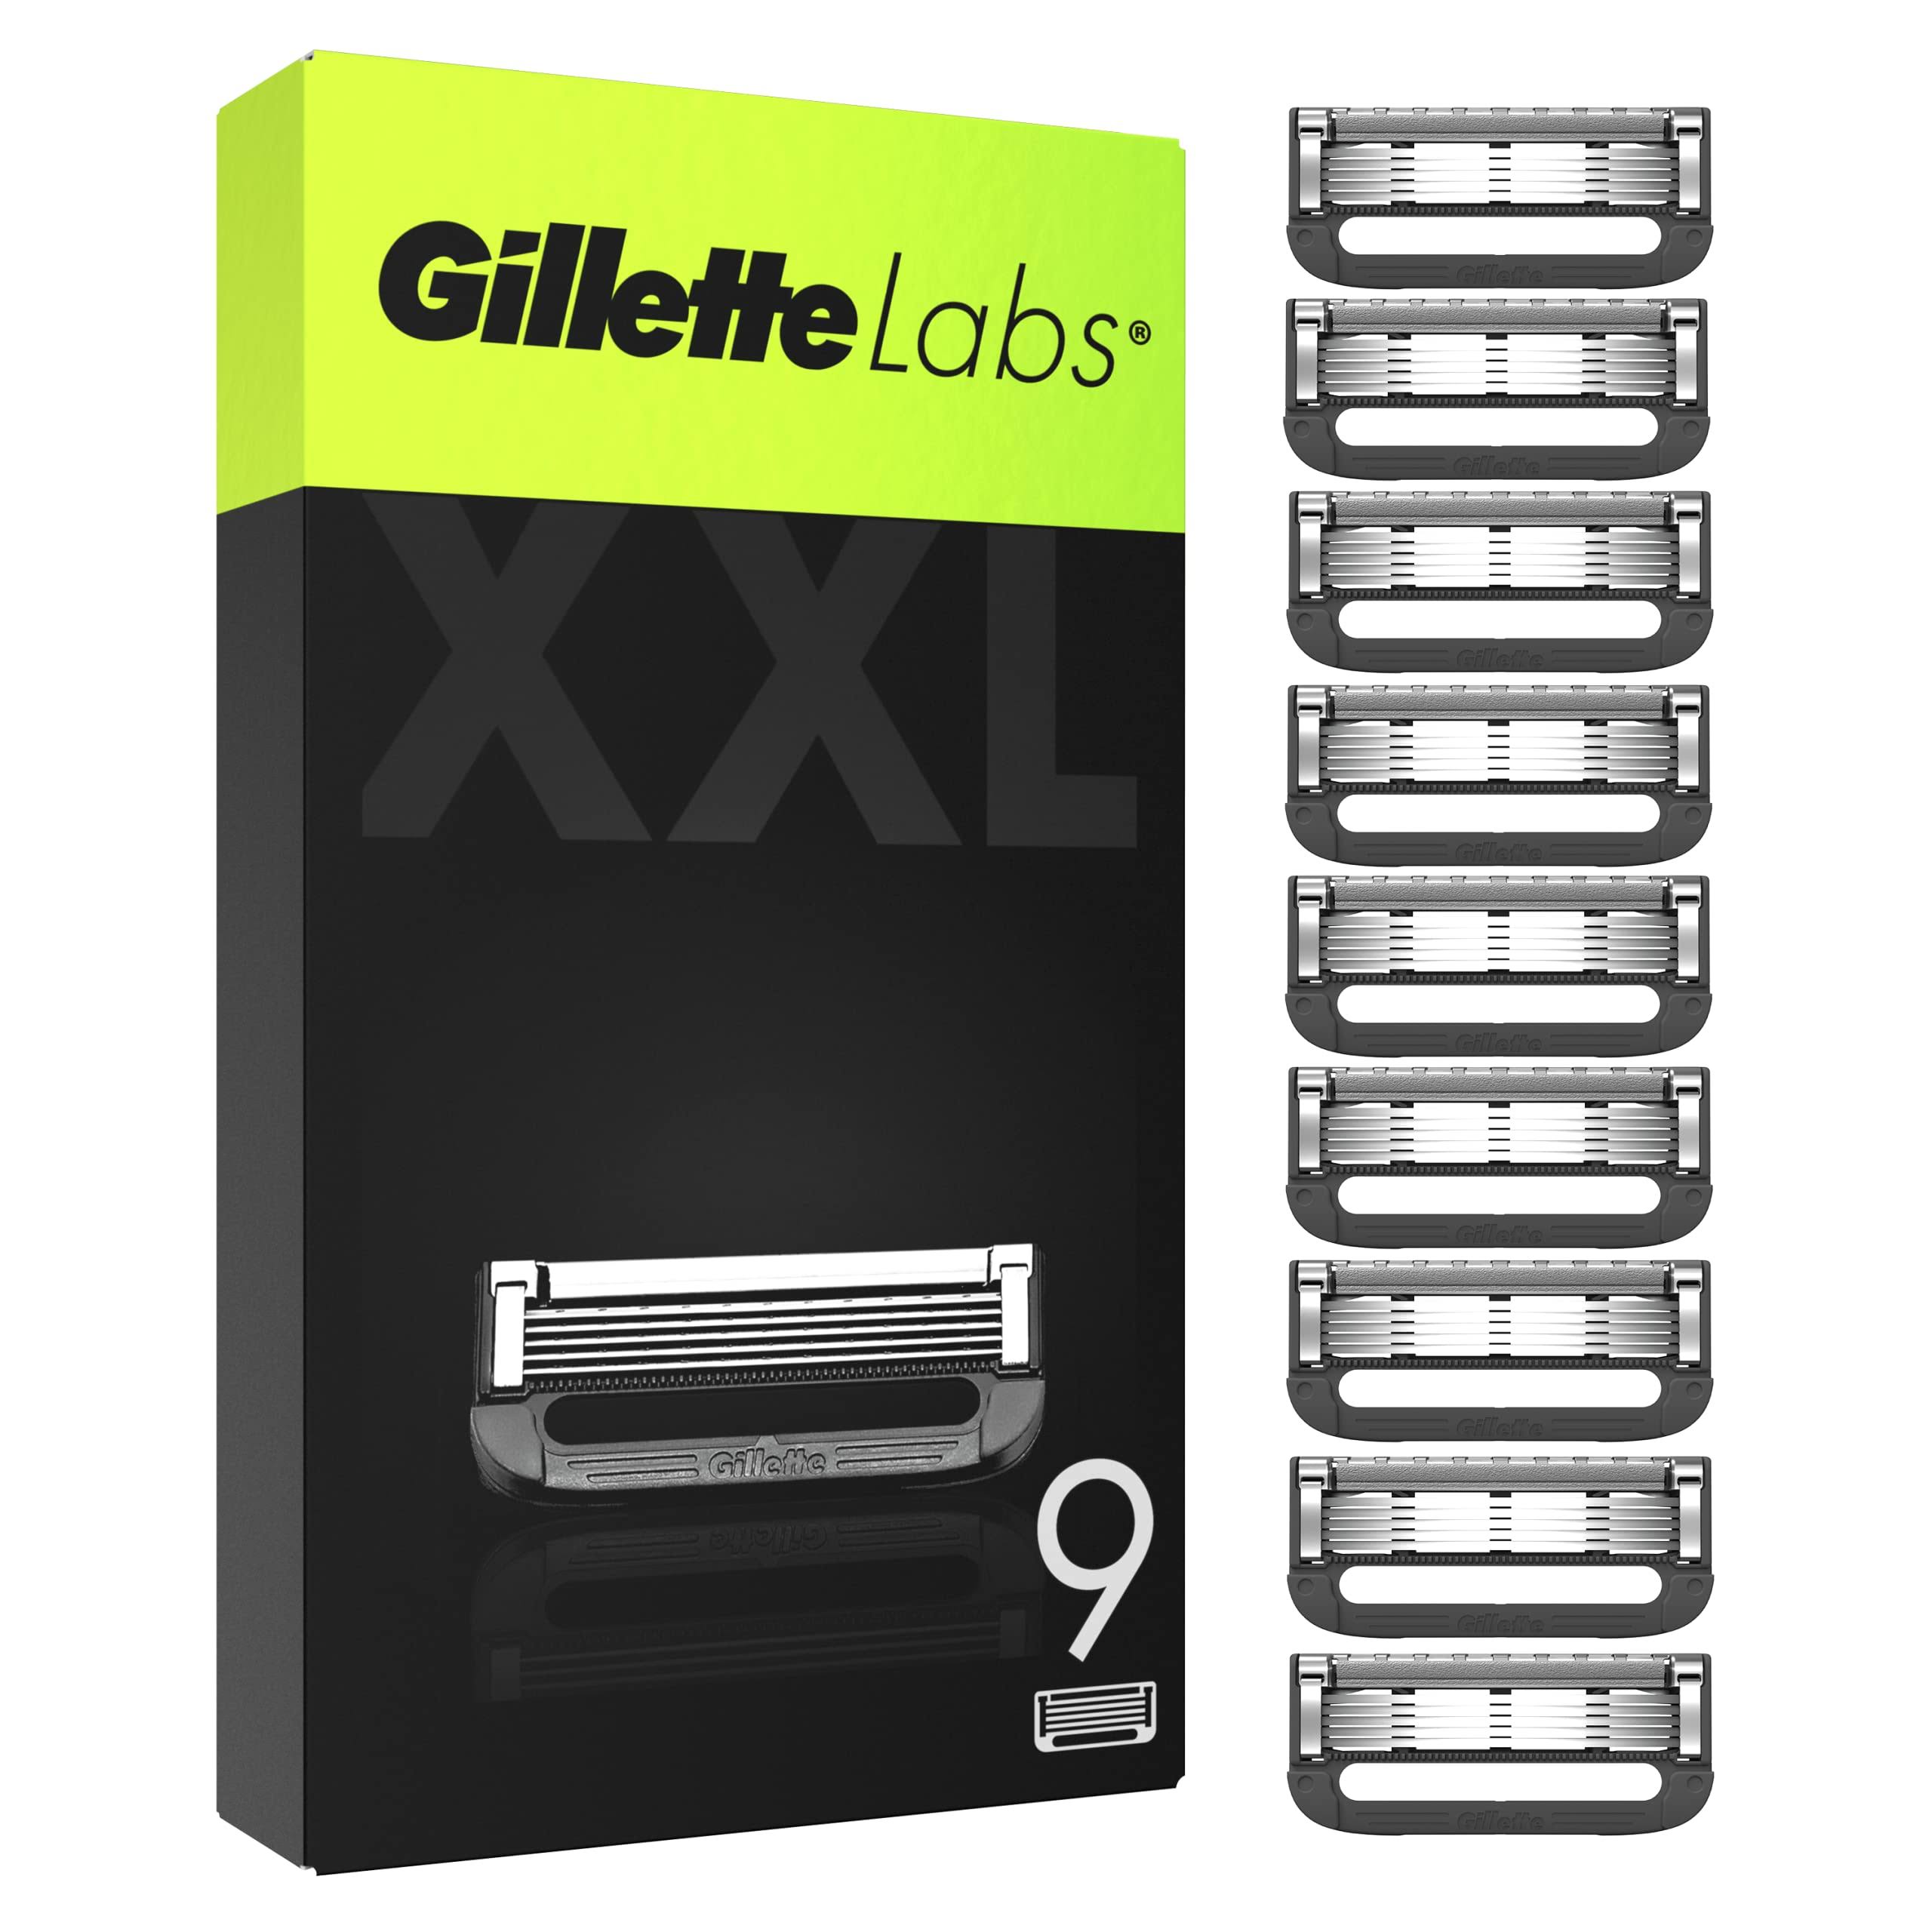 Gillette Labs Razor Blades Pack of 9 Razor Blade Refills. Gillette. Men's Razor Blades. 7702018605439.